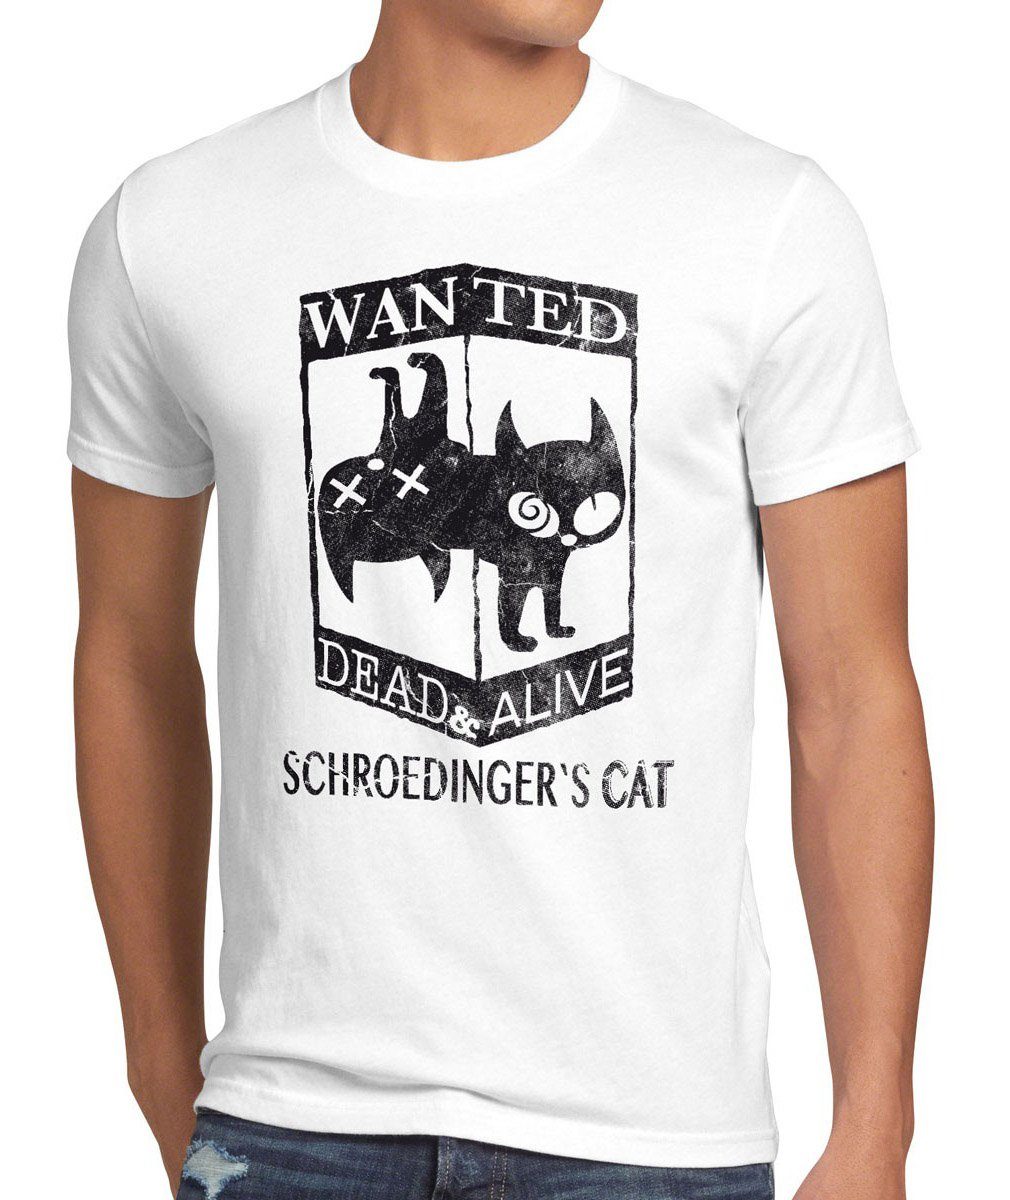 cat cooper Katze weiß theory T-Shirt sheldon top Print-Shirt style3 Herren Schroedingers bang Wanted big